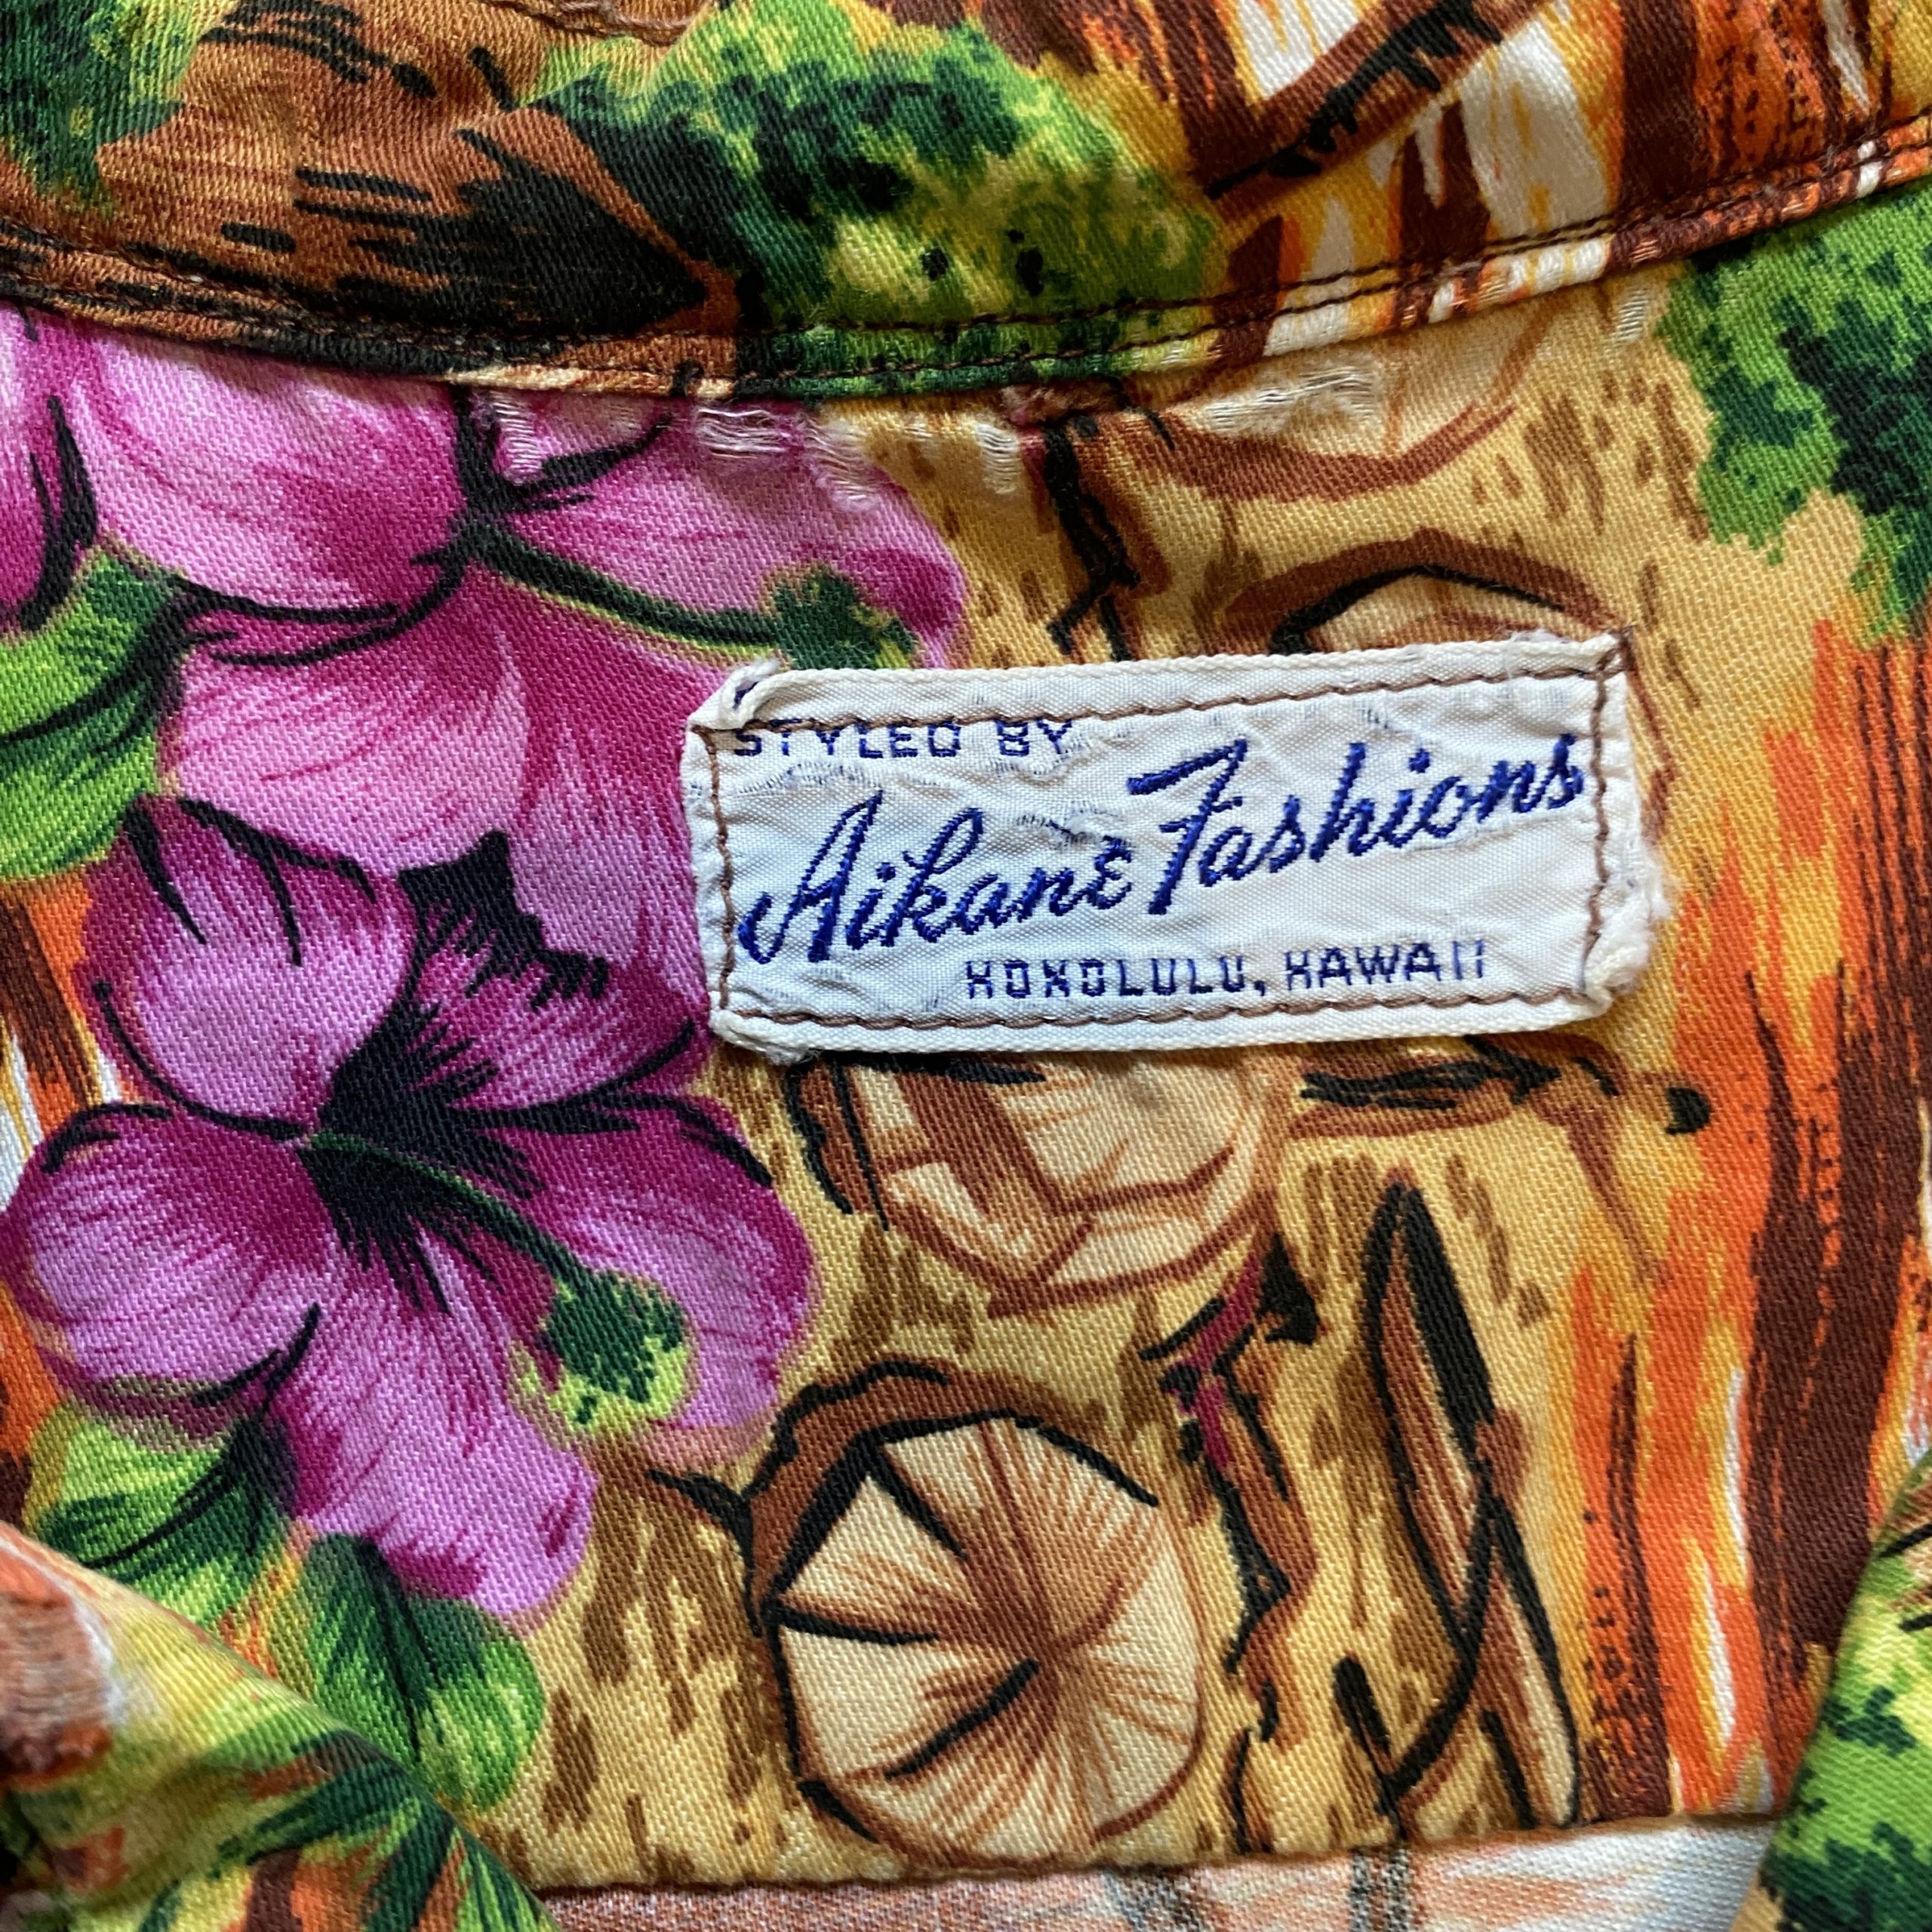 1960's USA製ビンテージ Aikane fashions アイランド柄 総柄 古銭